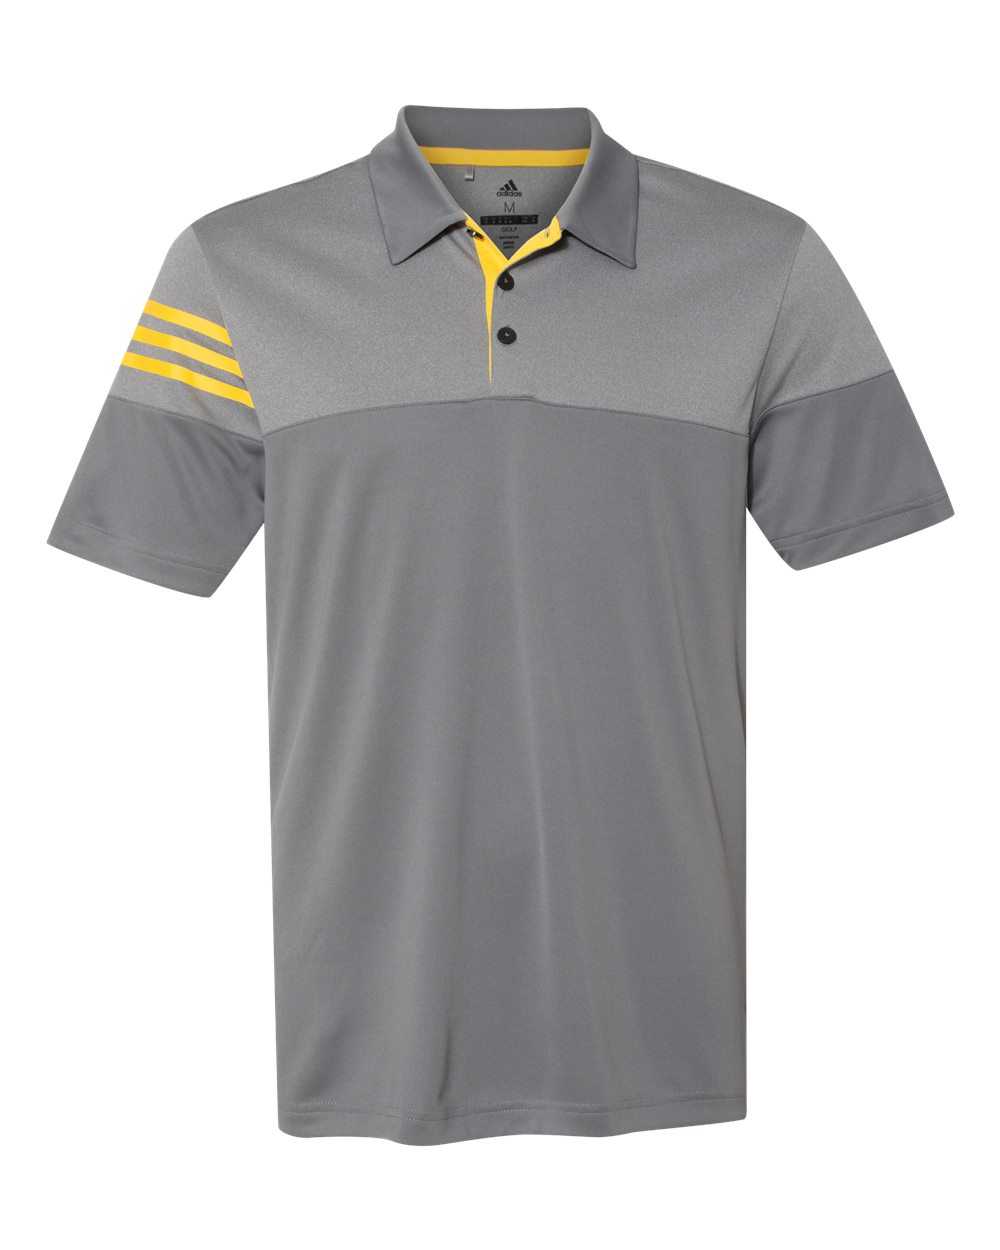 Adidas A213 Heathered 3-Stripes Block Sport Shirt - Vista Grey EQT Yellow - HIT a Double